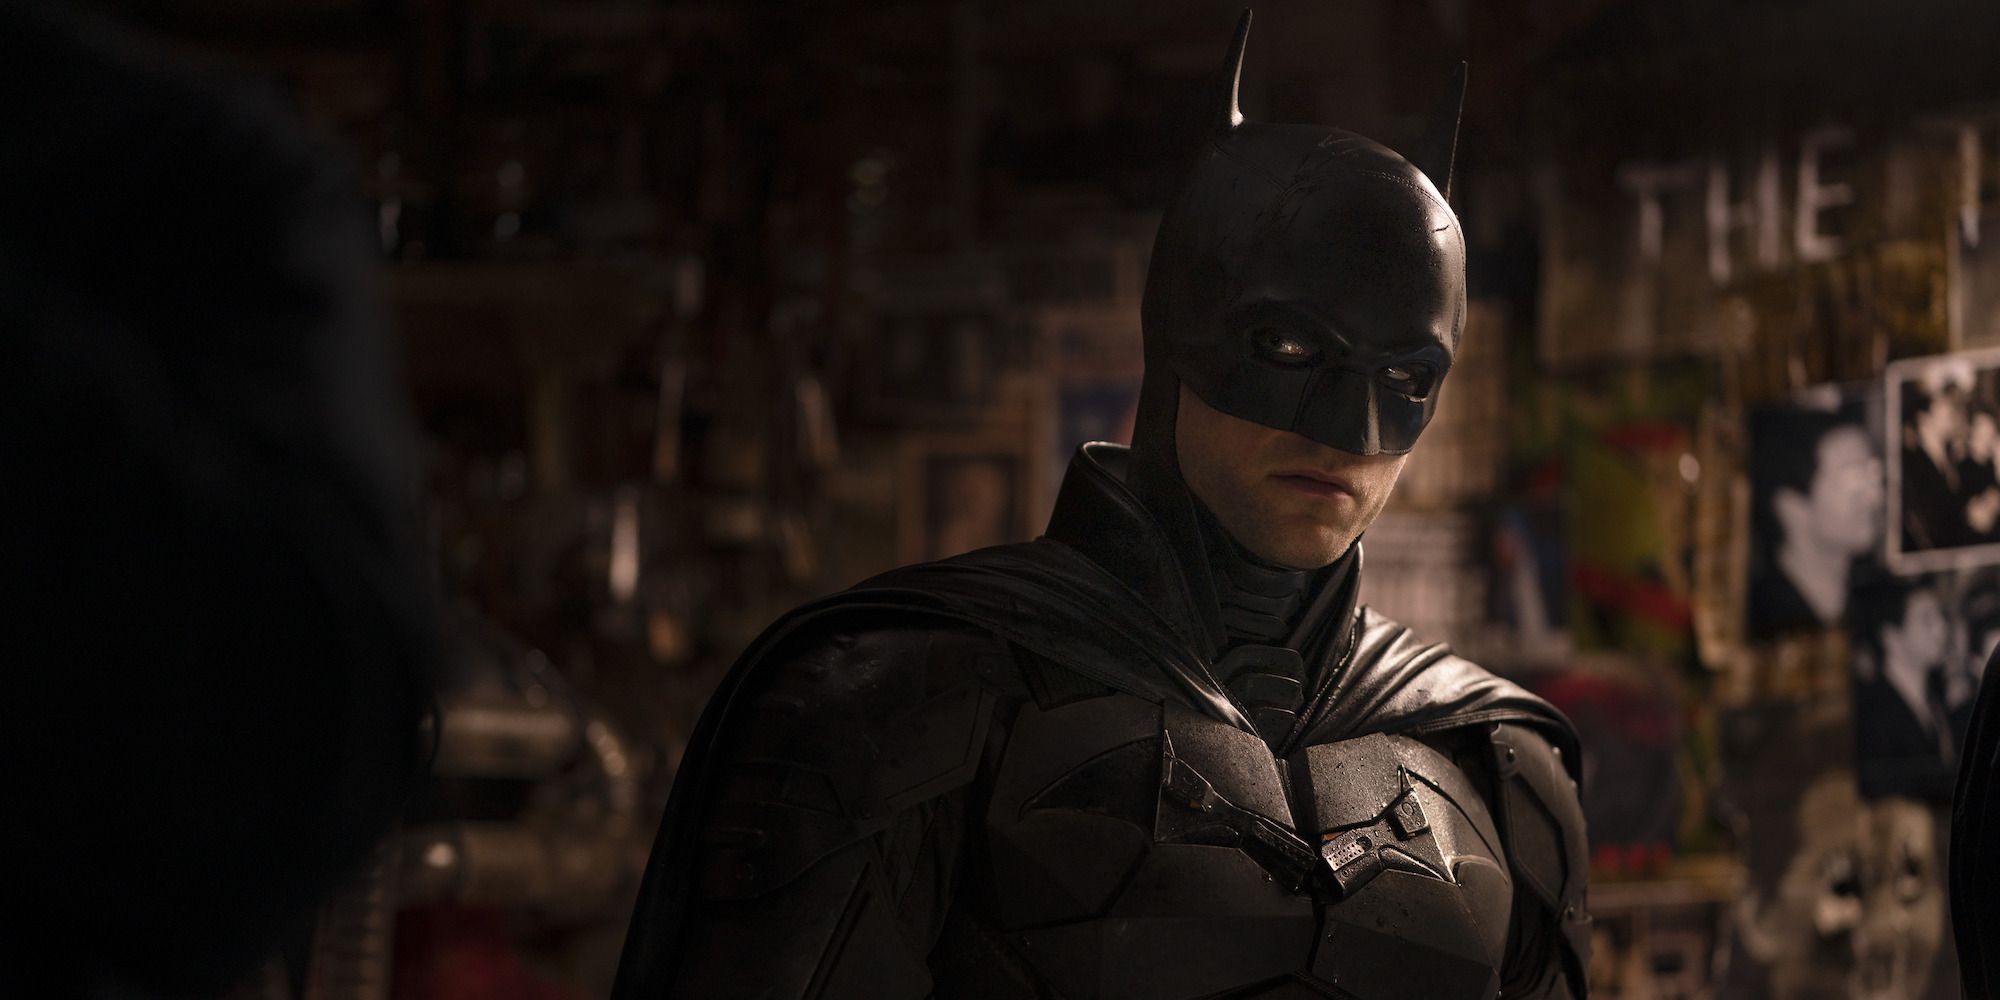 The Batman Budget Reportedly Double Original Cost Estimates